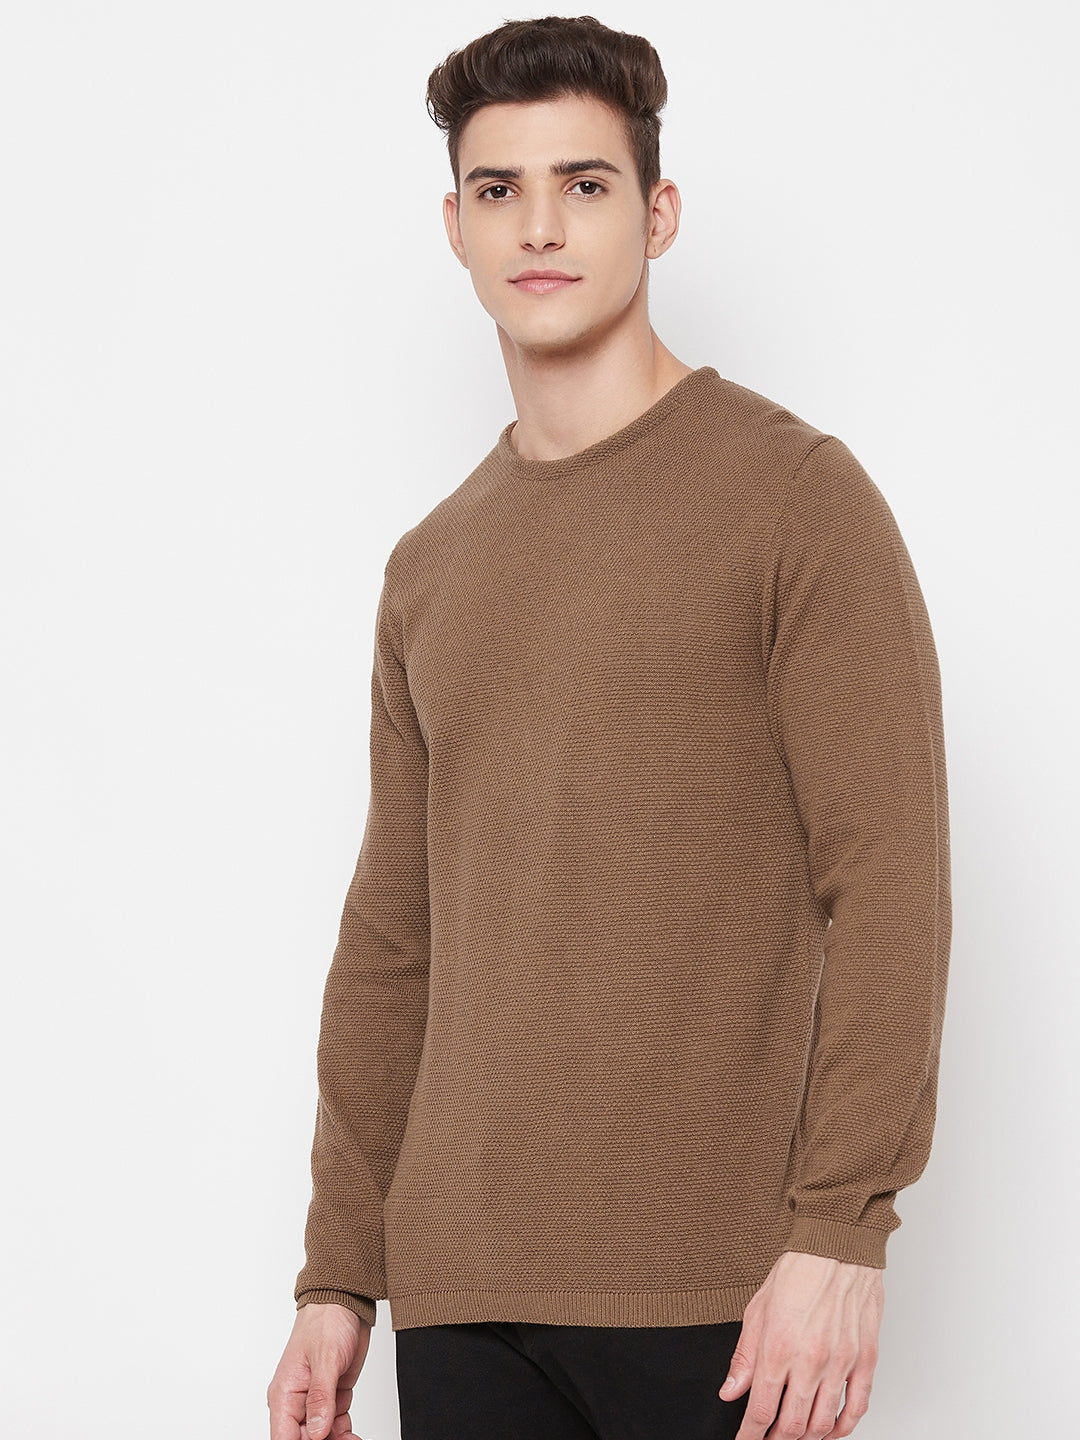 Men's Sweater